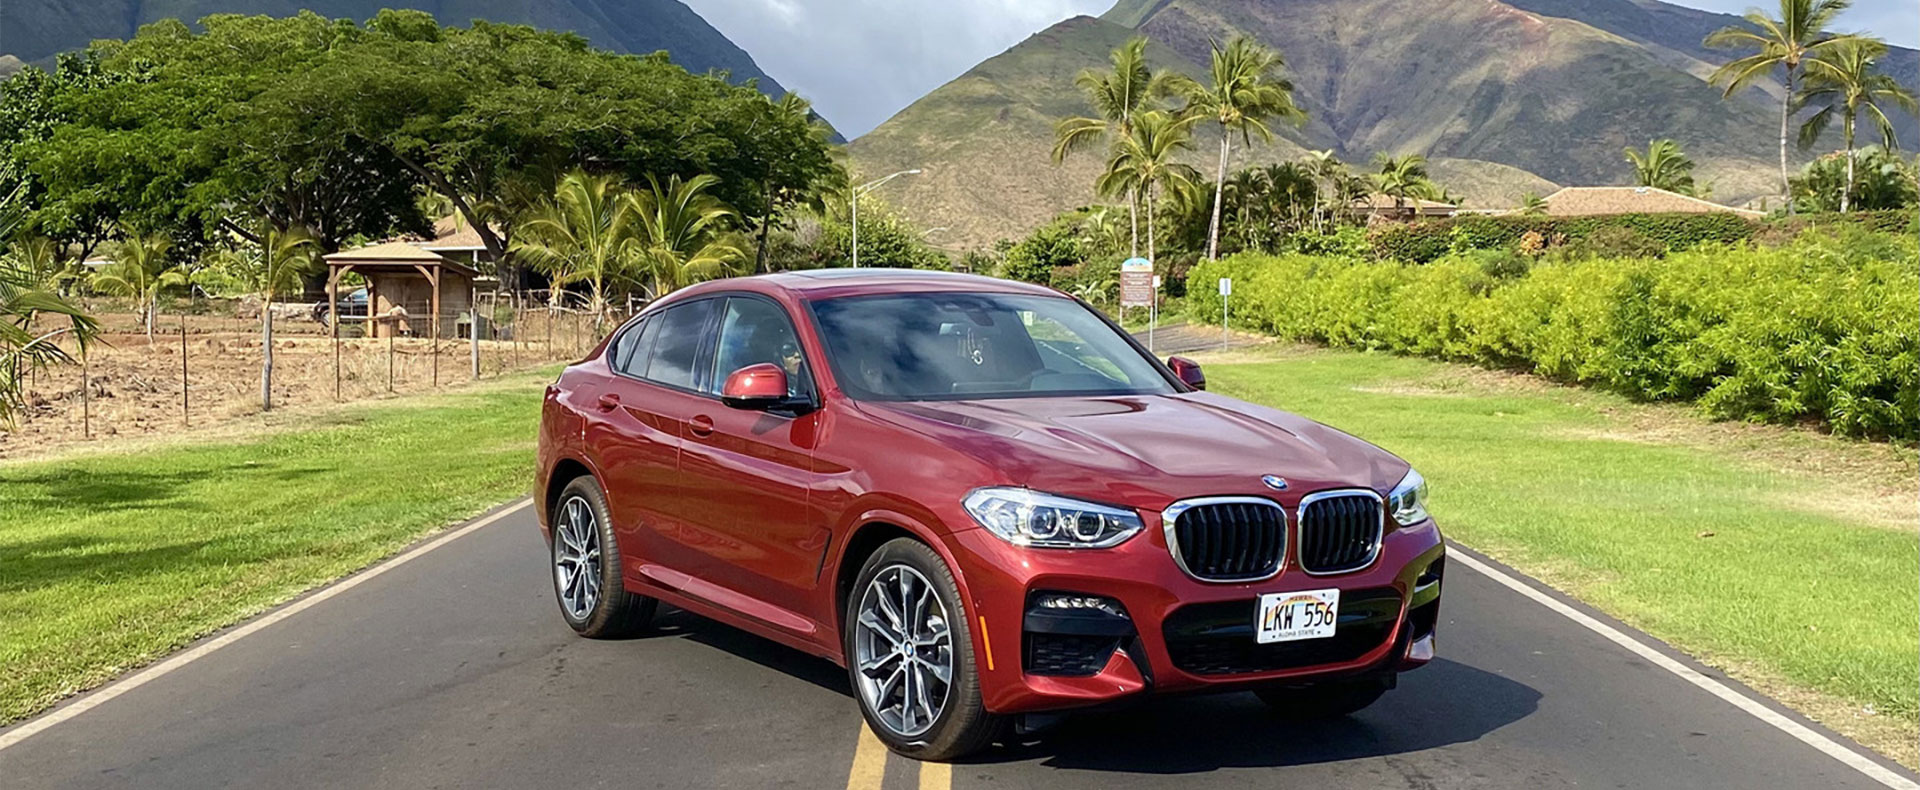 Luxury Car Rentals in Maui